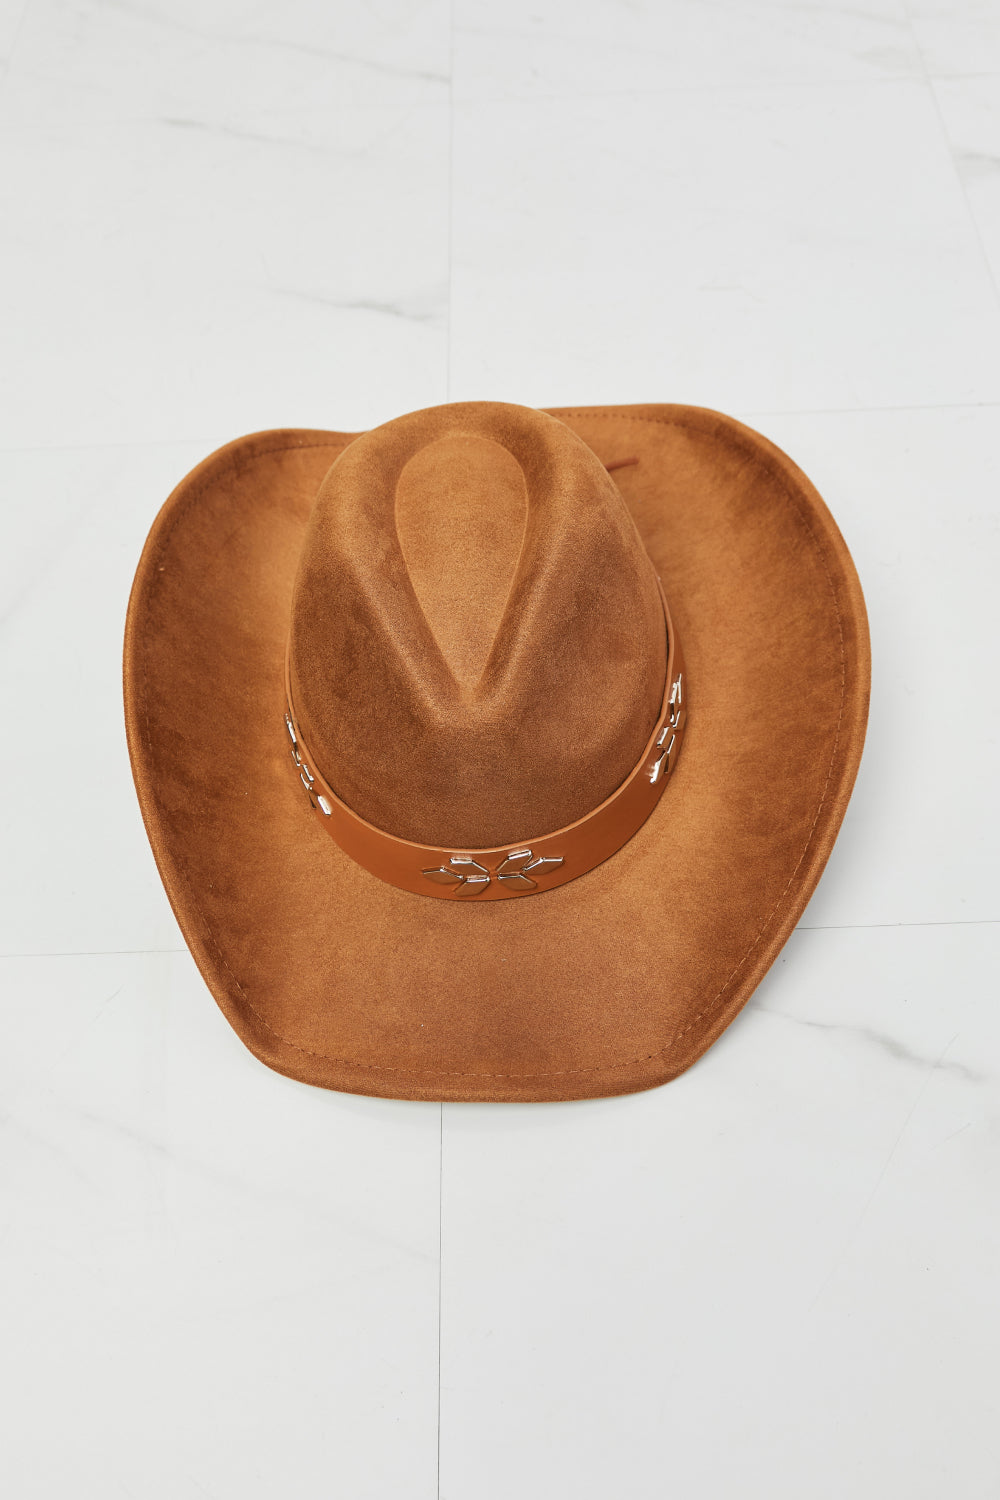 Yellowstone Ranch Cowgirl Hat (Women's Fedora)